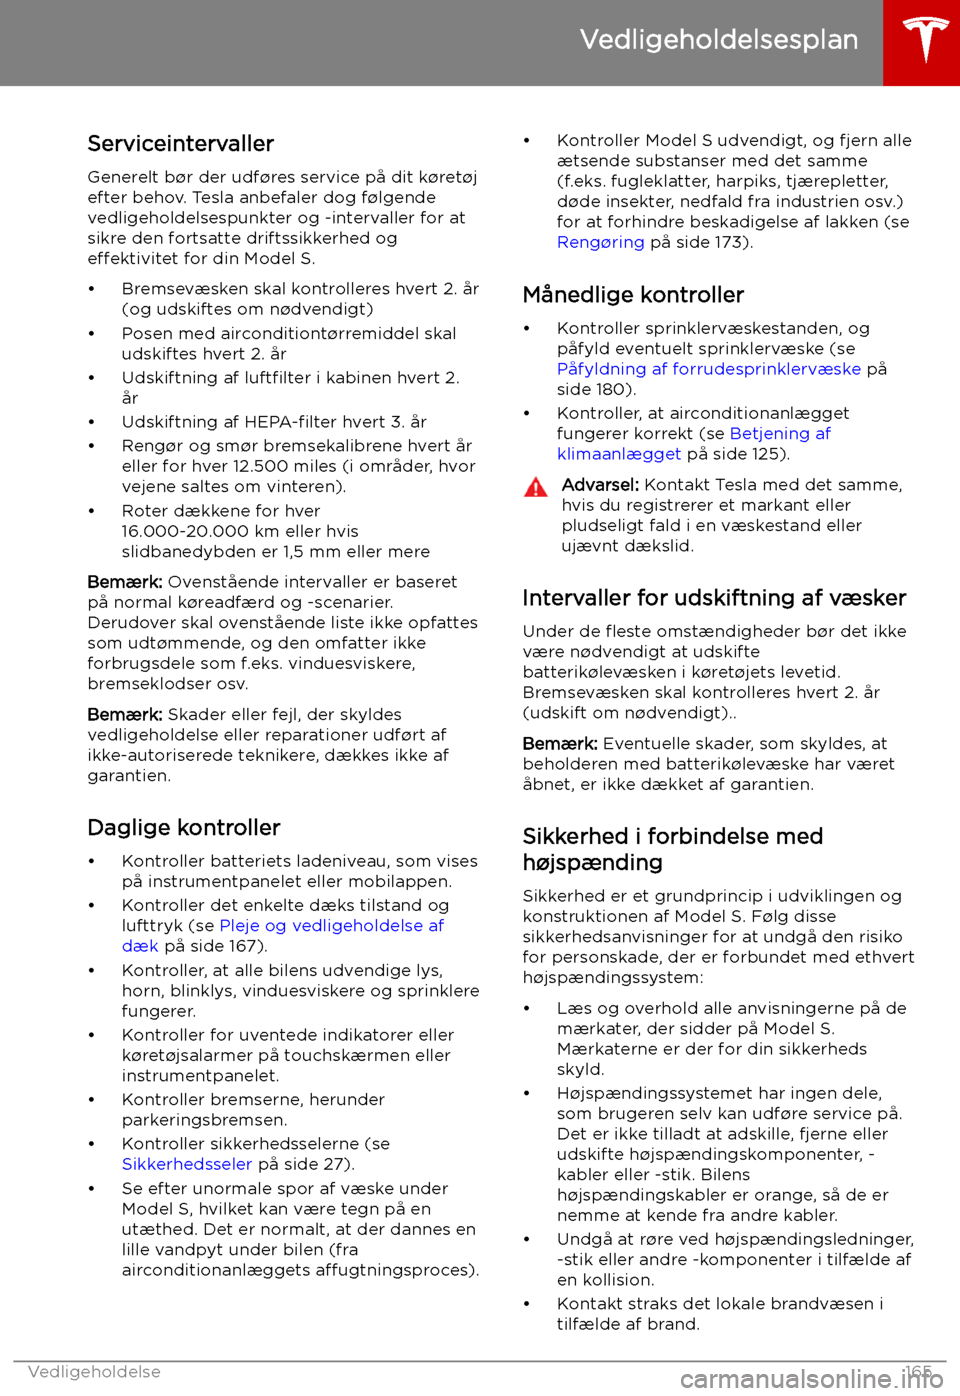 TESLA MODEL S 2019  Instruktionsbog (in Danish) Vedligeholdelse
Vedligeholdelsesplan
Serviceintervaller
Generelt b